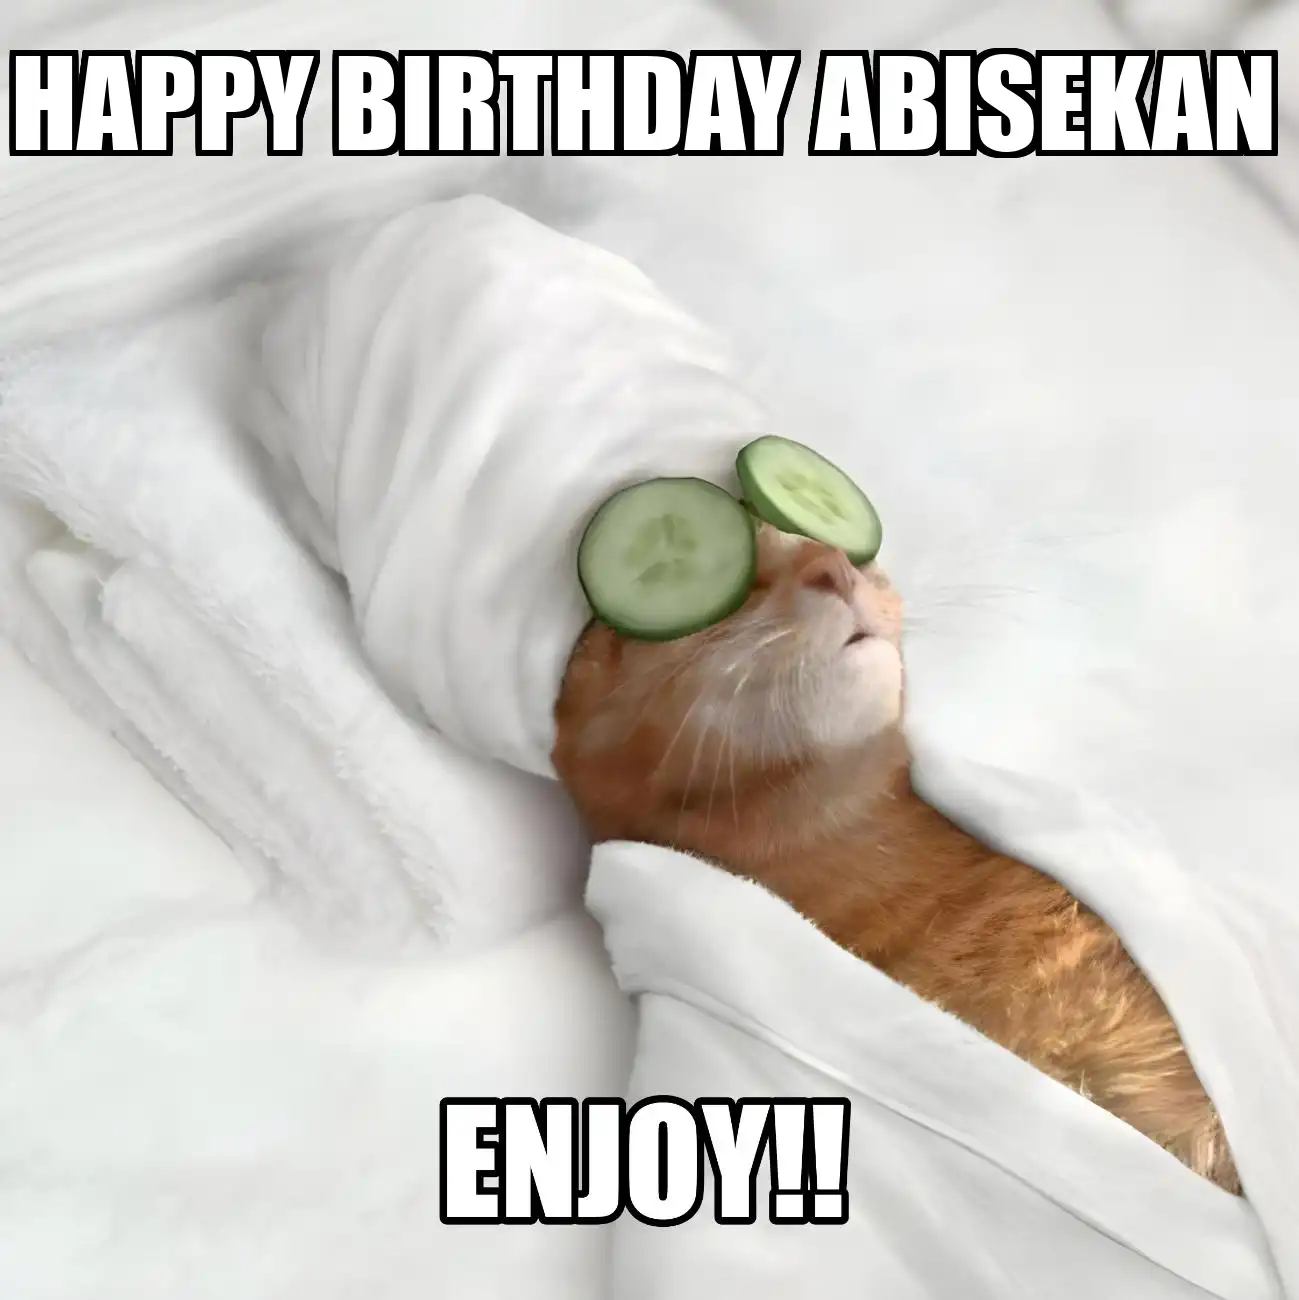 Happy Birthday Abisekan Enjoy Cat Meme